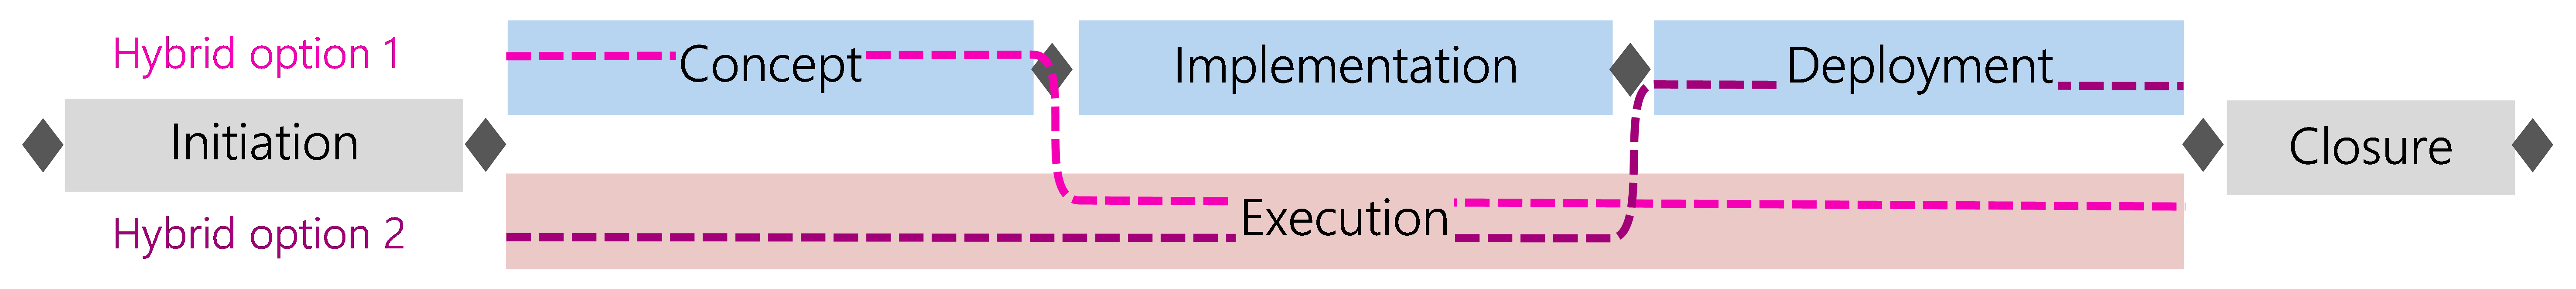 Figure 34: Hybrid development approach - example options